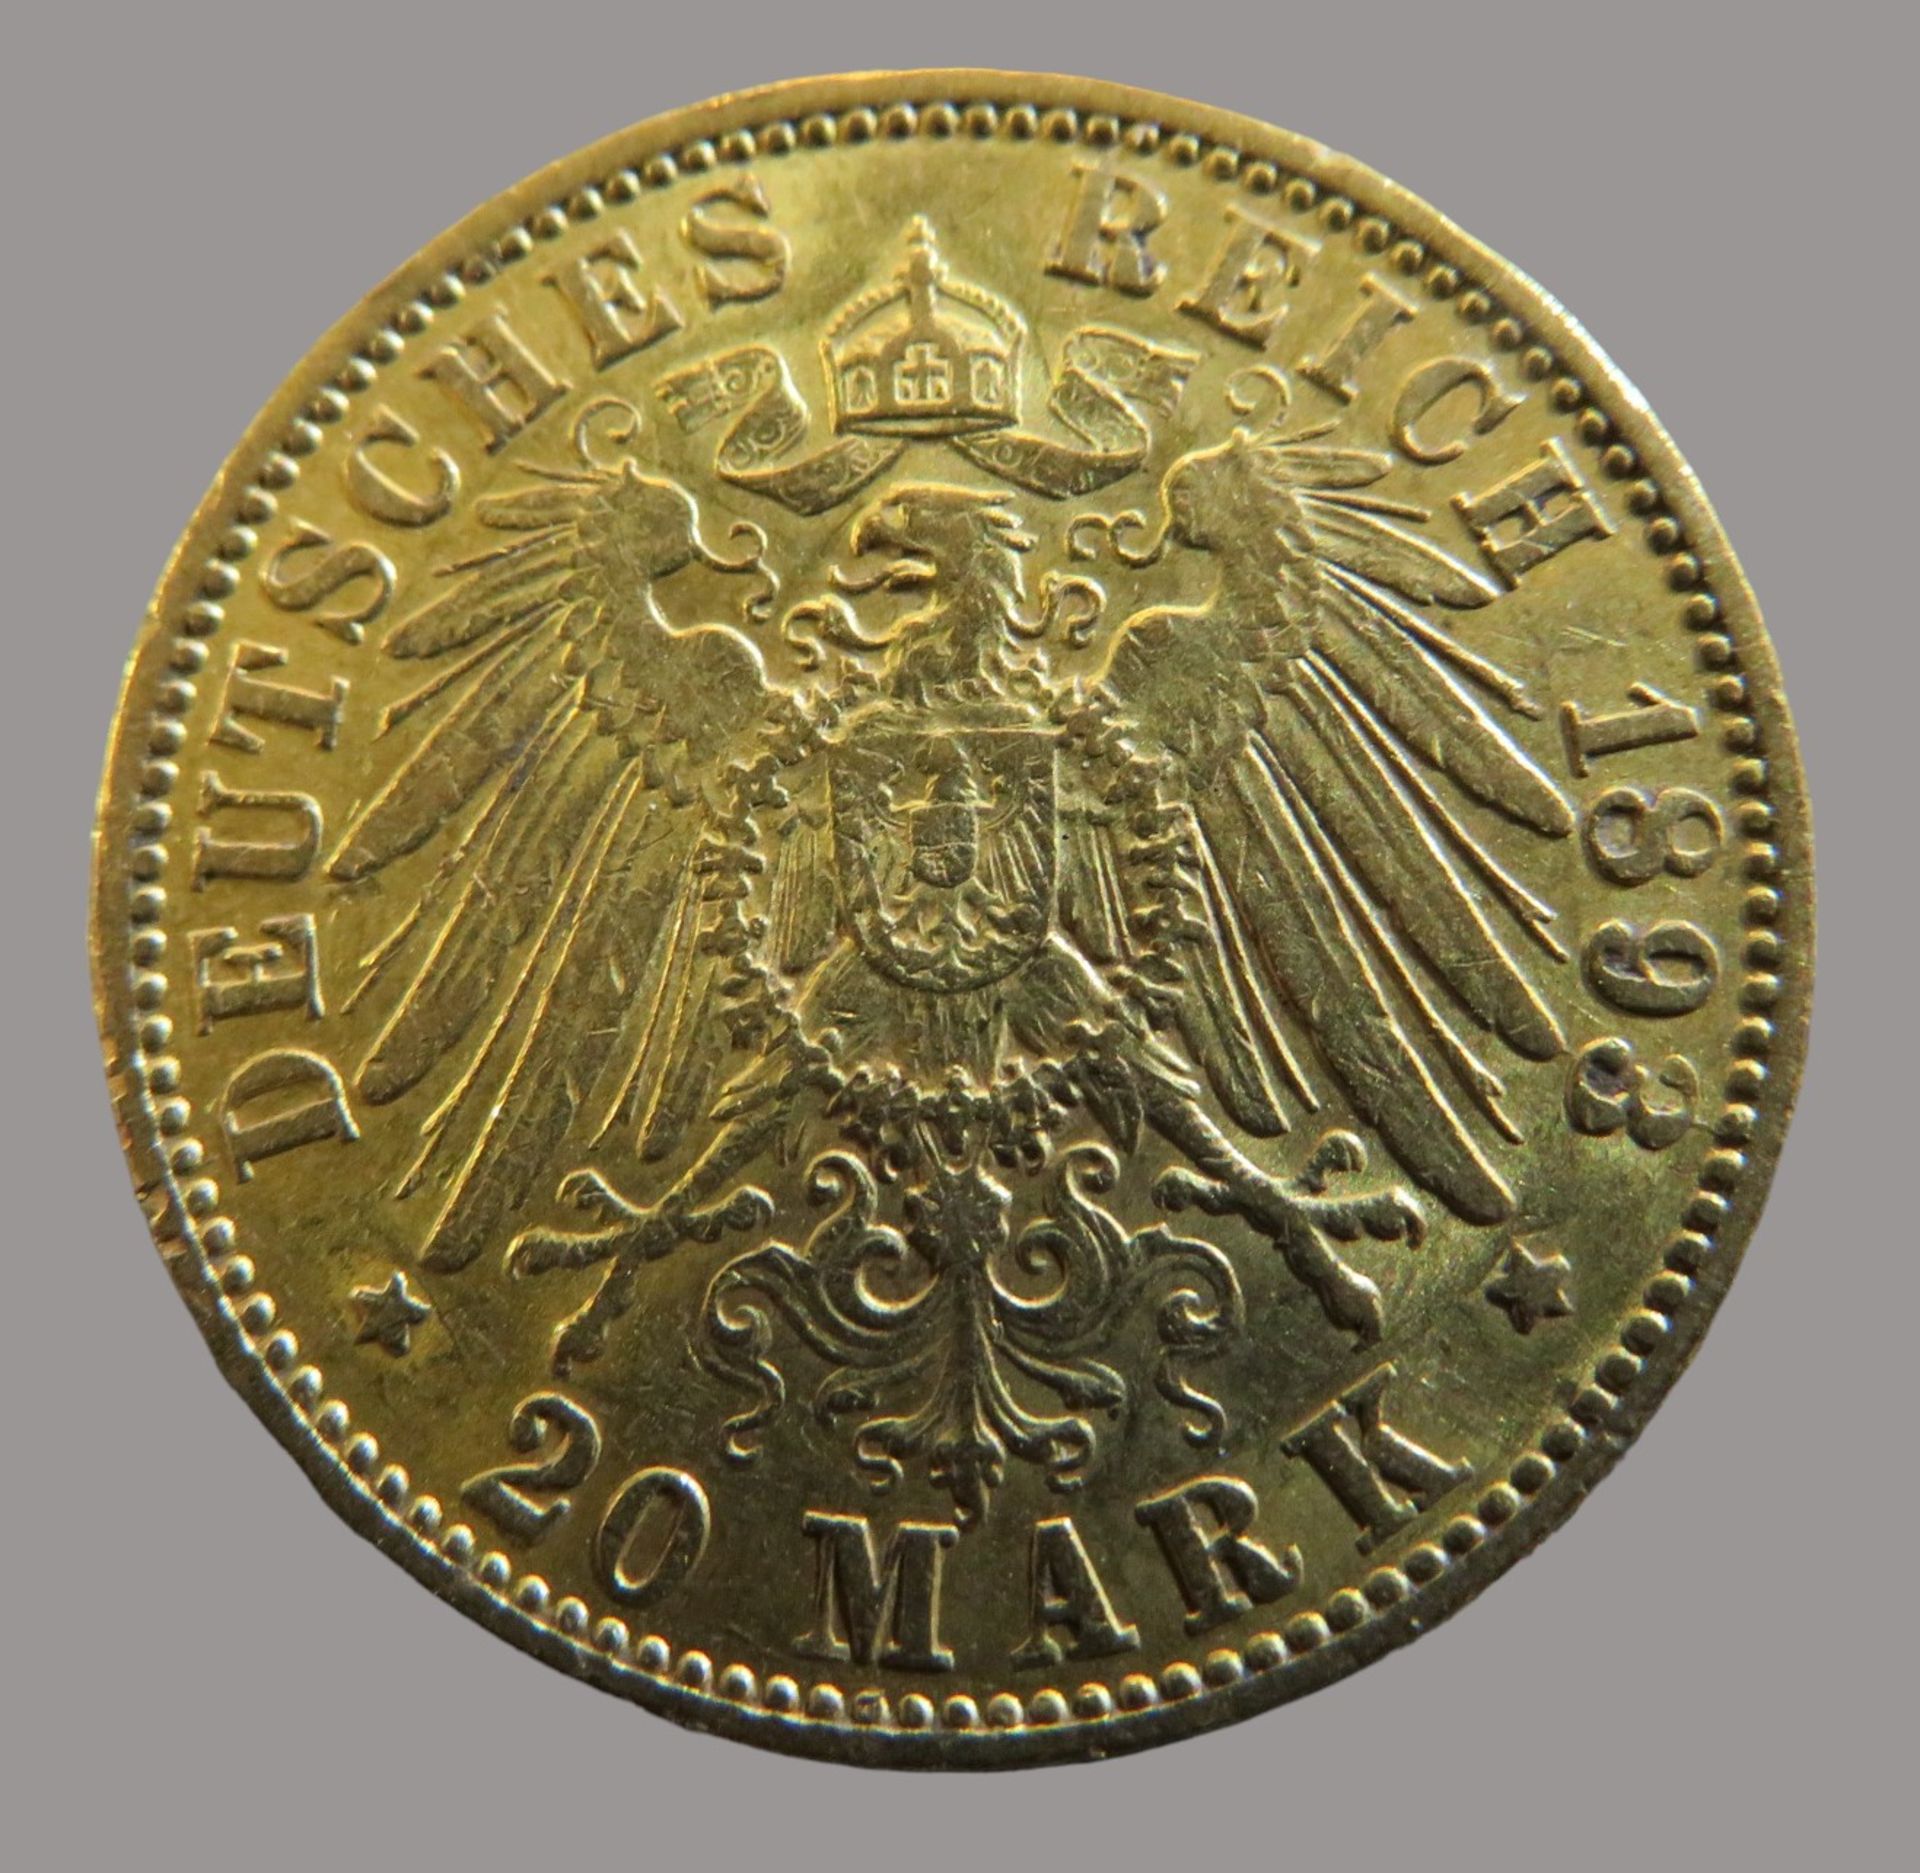 Goldmünze, 20 Mark, Hansestadt Hamburg, 1893J, Gold 900/000, 7,96 g, J 212, Erhaltungszustand SS, d - Image 2 of 2